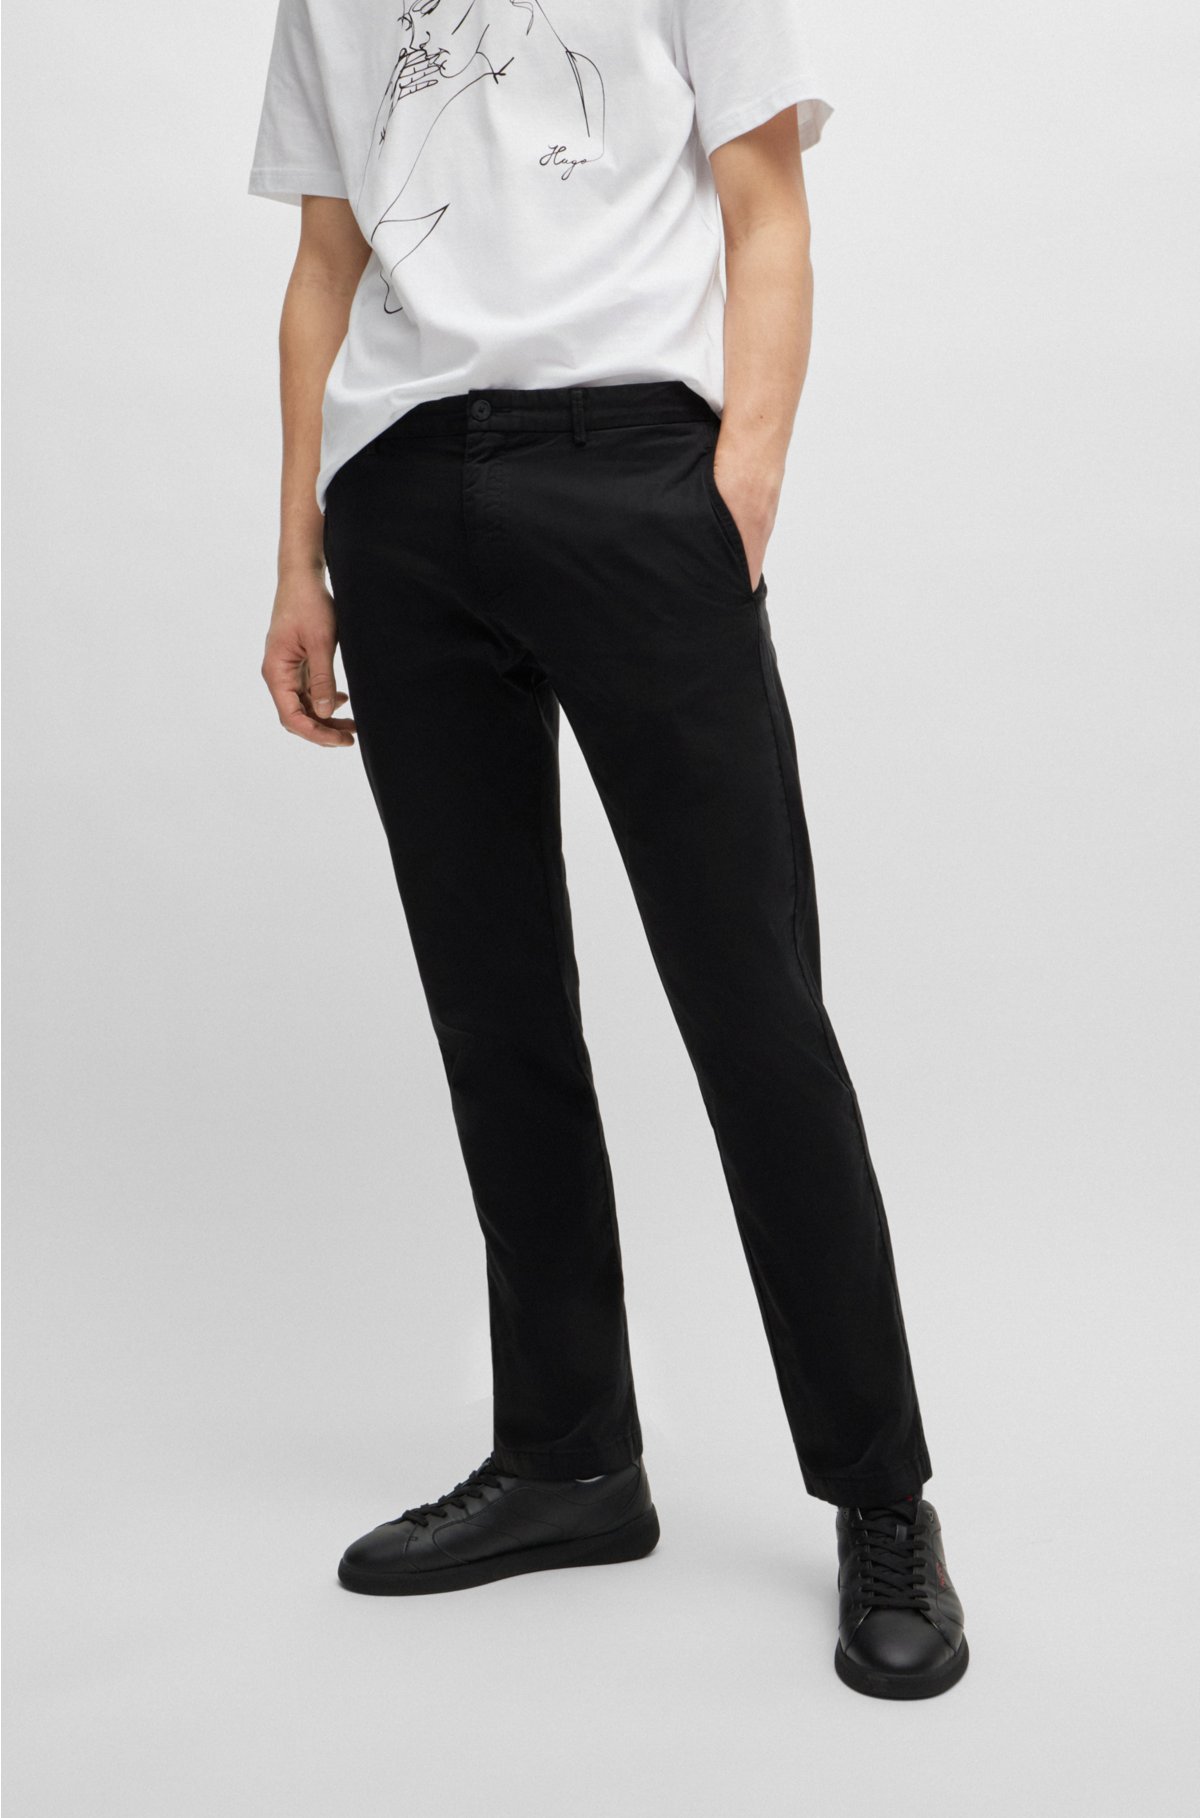 Milano Style pantalon chino homme en gabardine et modal stretch coupe